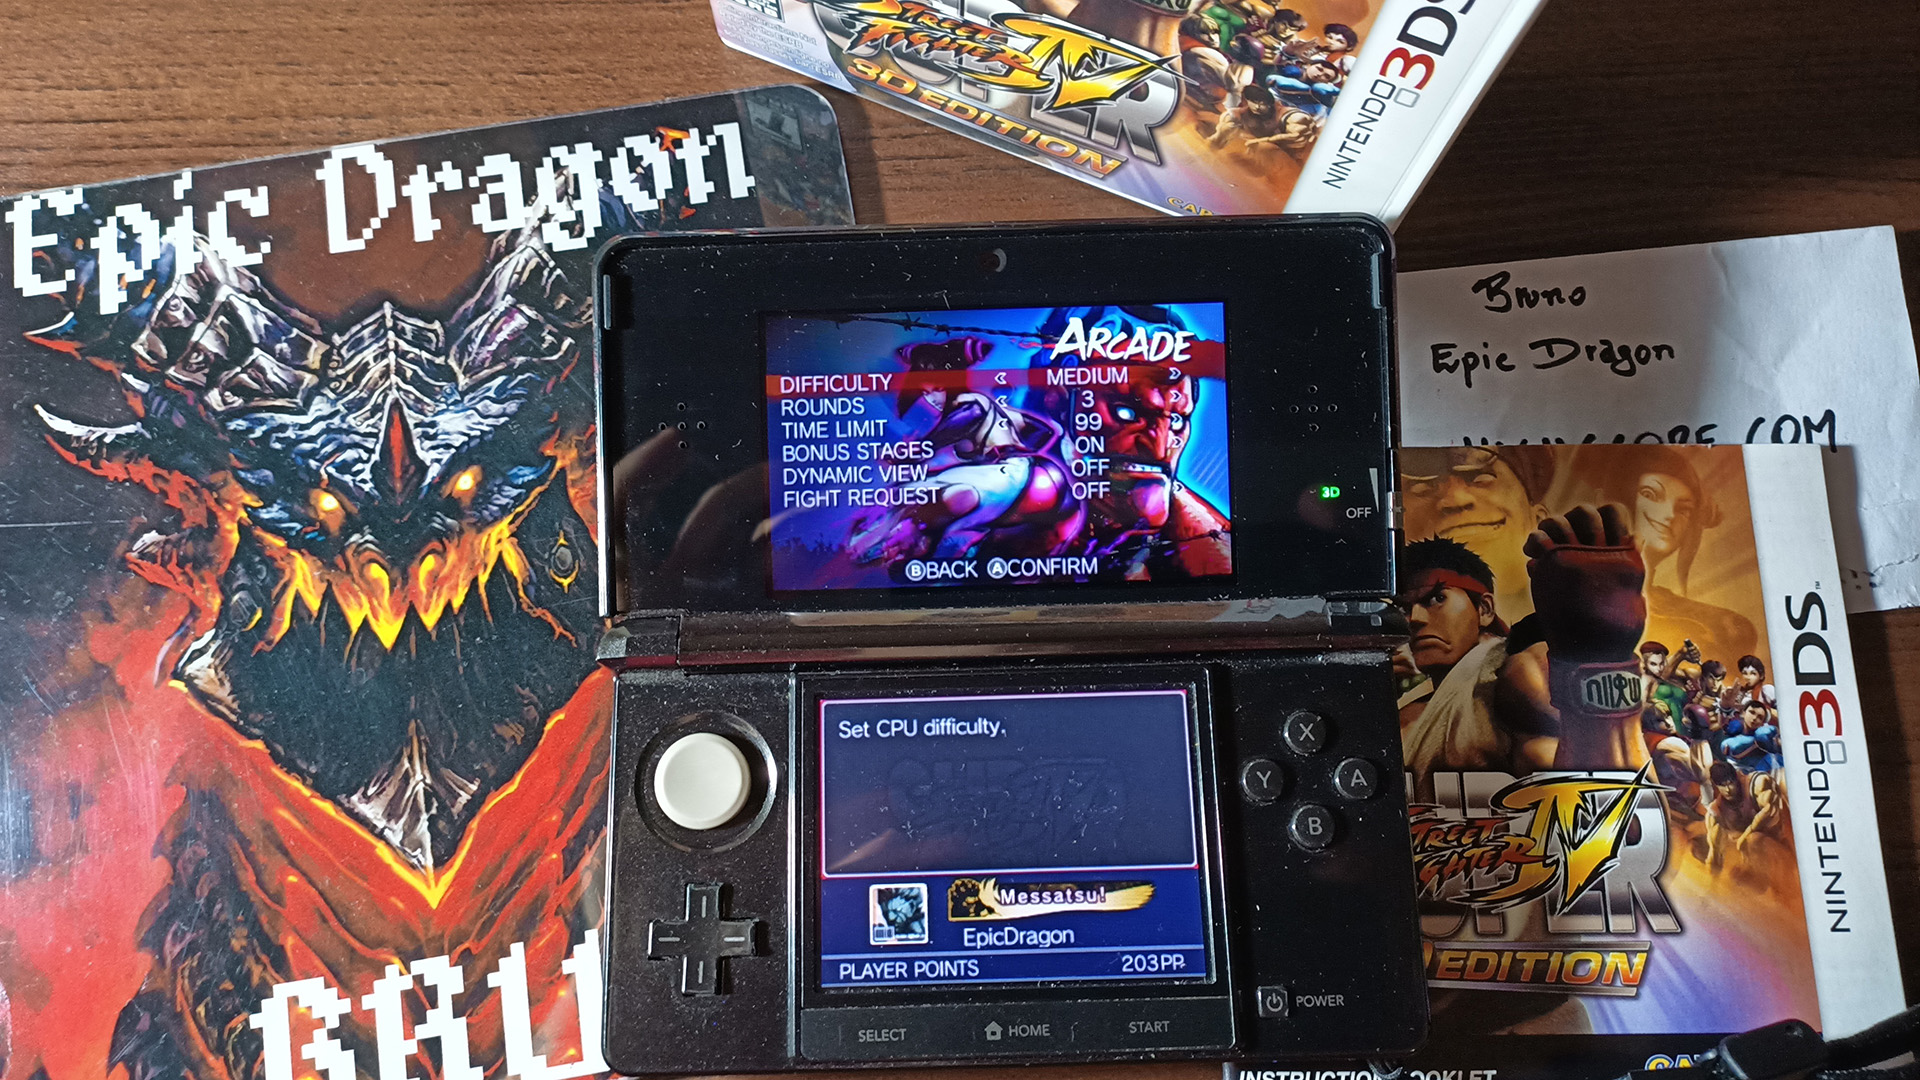 EpicDragon: Super Street Fighter IV 3D Edition: Arcade: Seth (Nintendo 3DS) 184,900 points on 2022-08-21 14:14:59